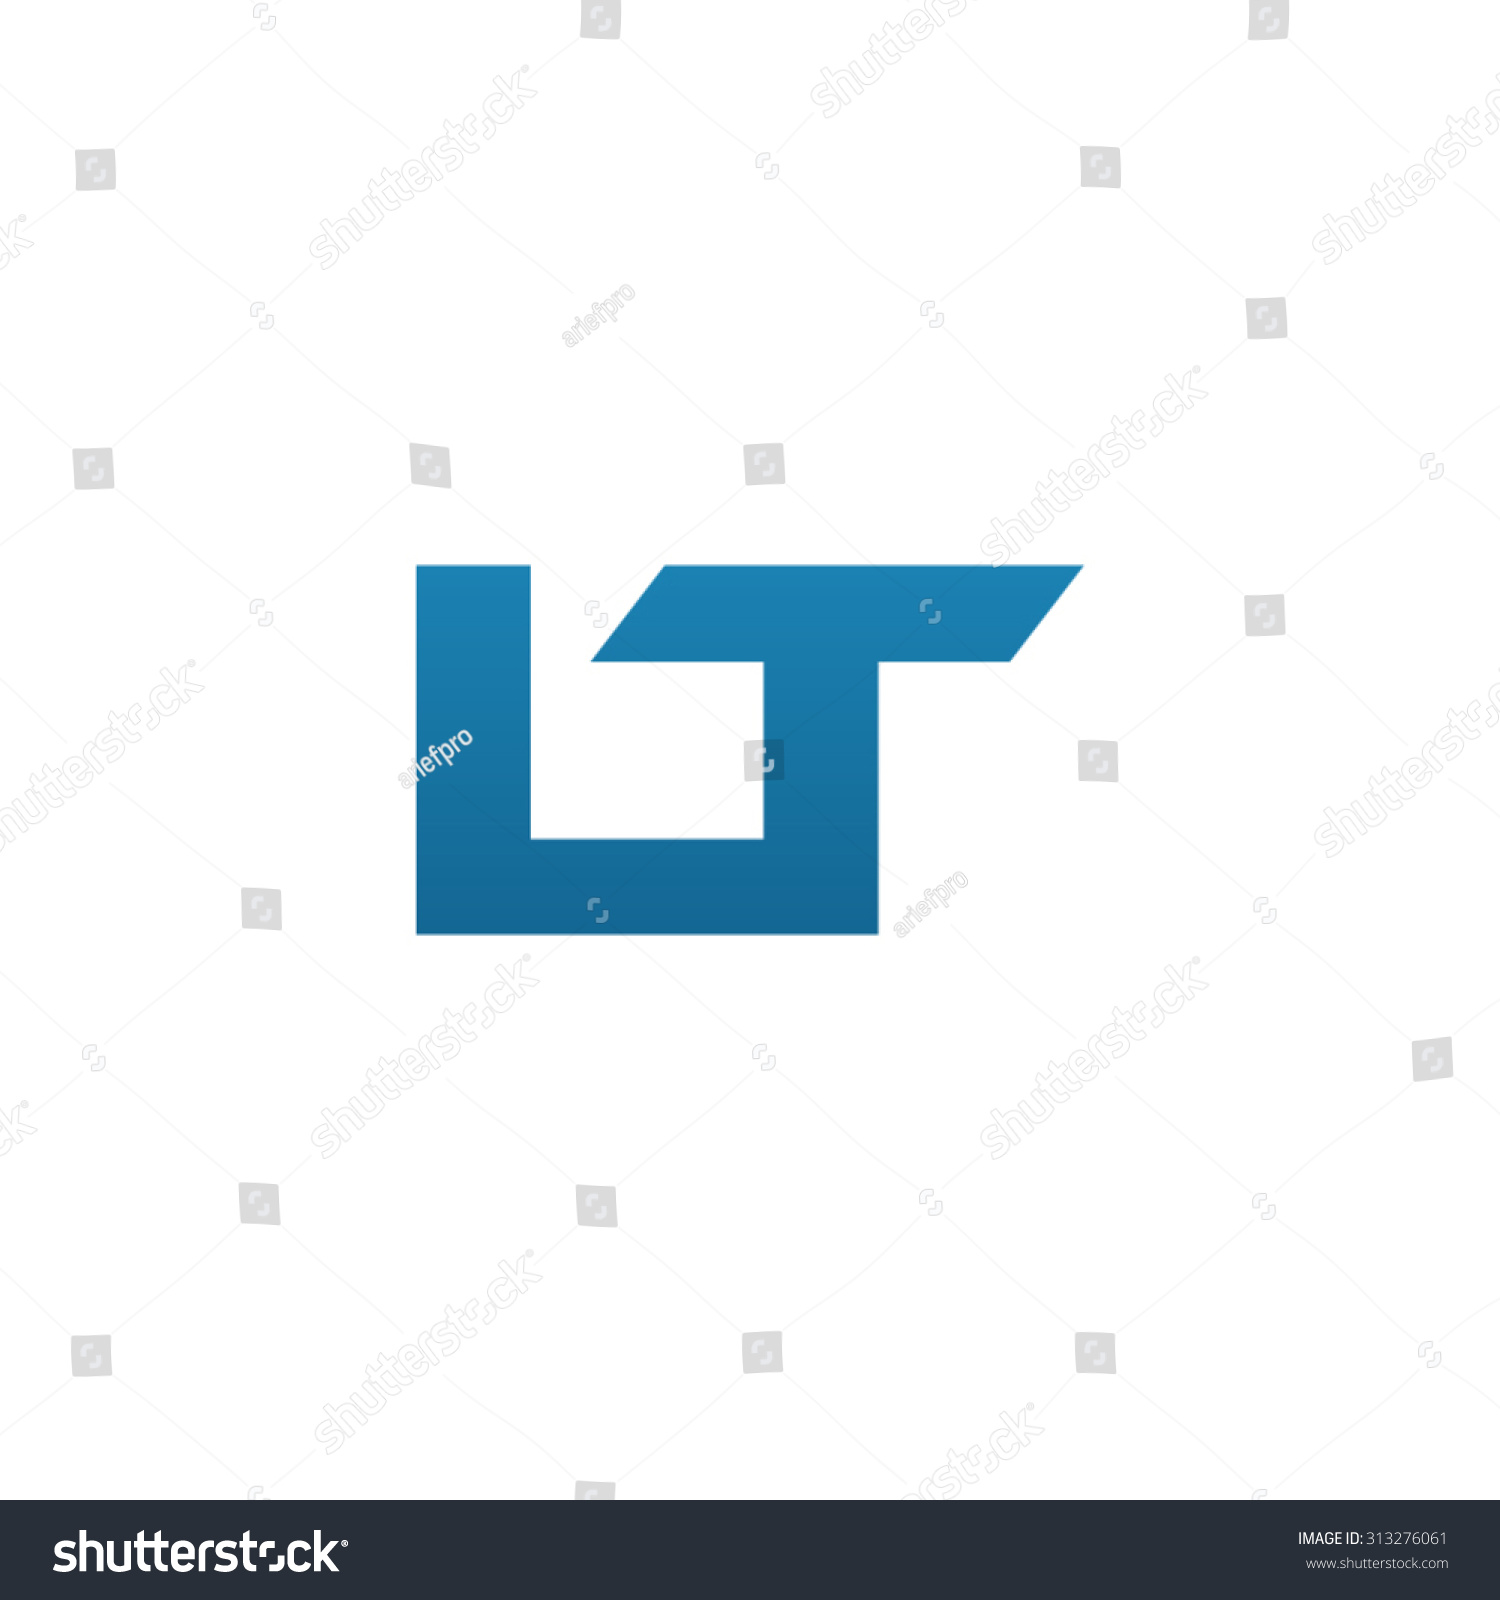 173 T l trade logo Images, Stock Photos & Vectors | Shutterstock